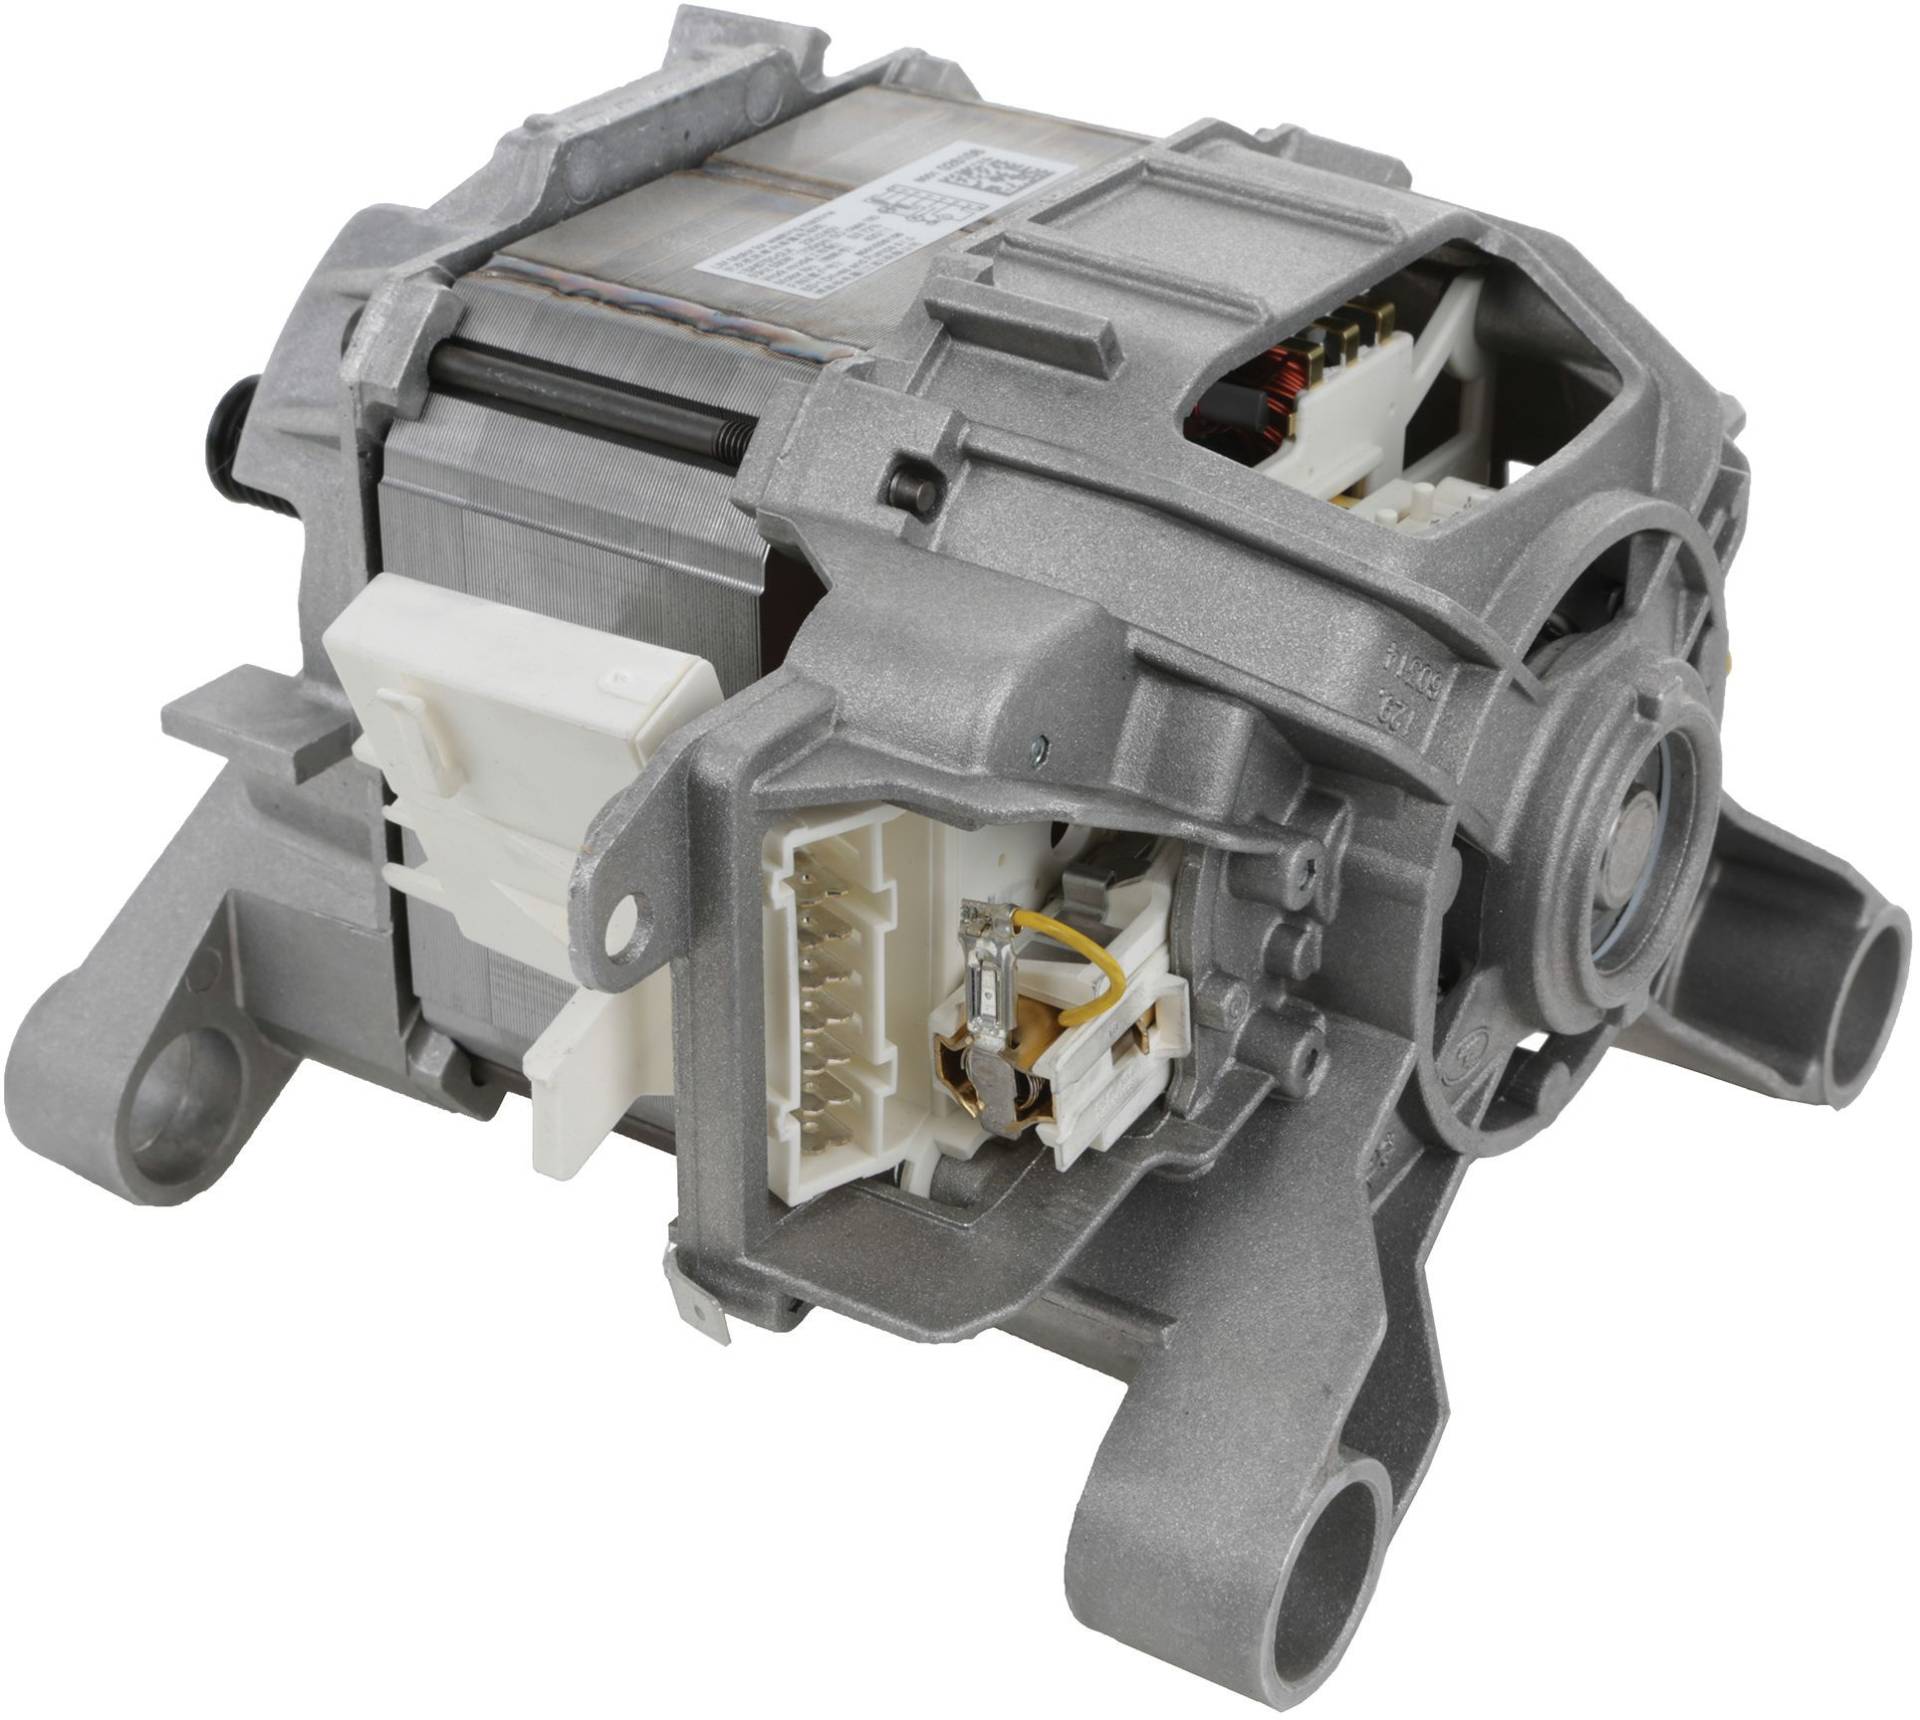 Motor UMAC 1BA6755 F13 1000 60L 3G_1 35 (BD-00145810) von BSH